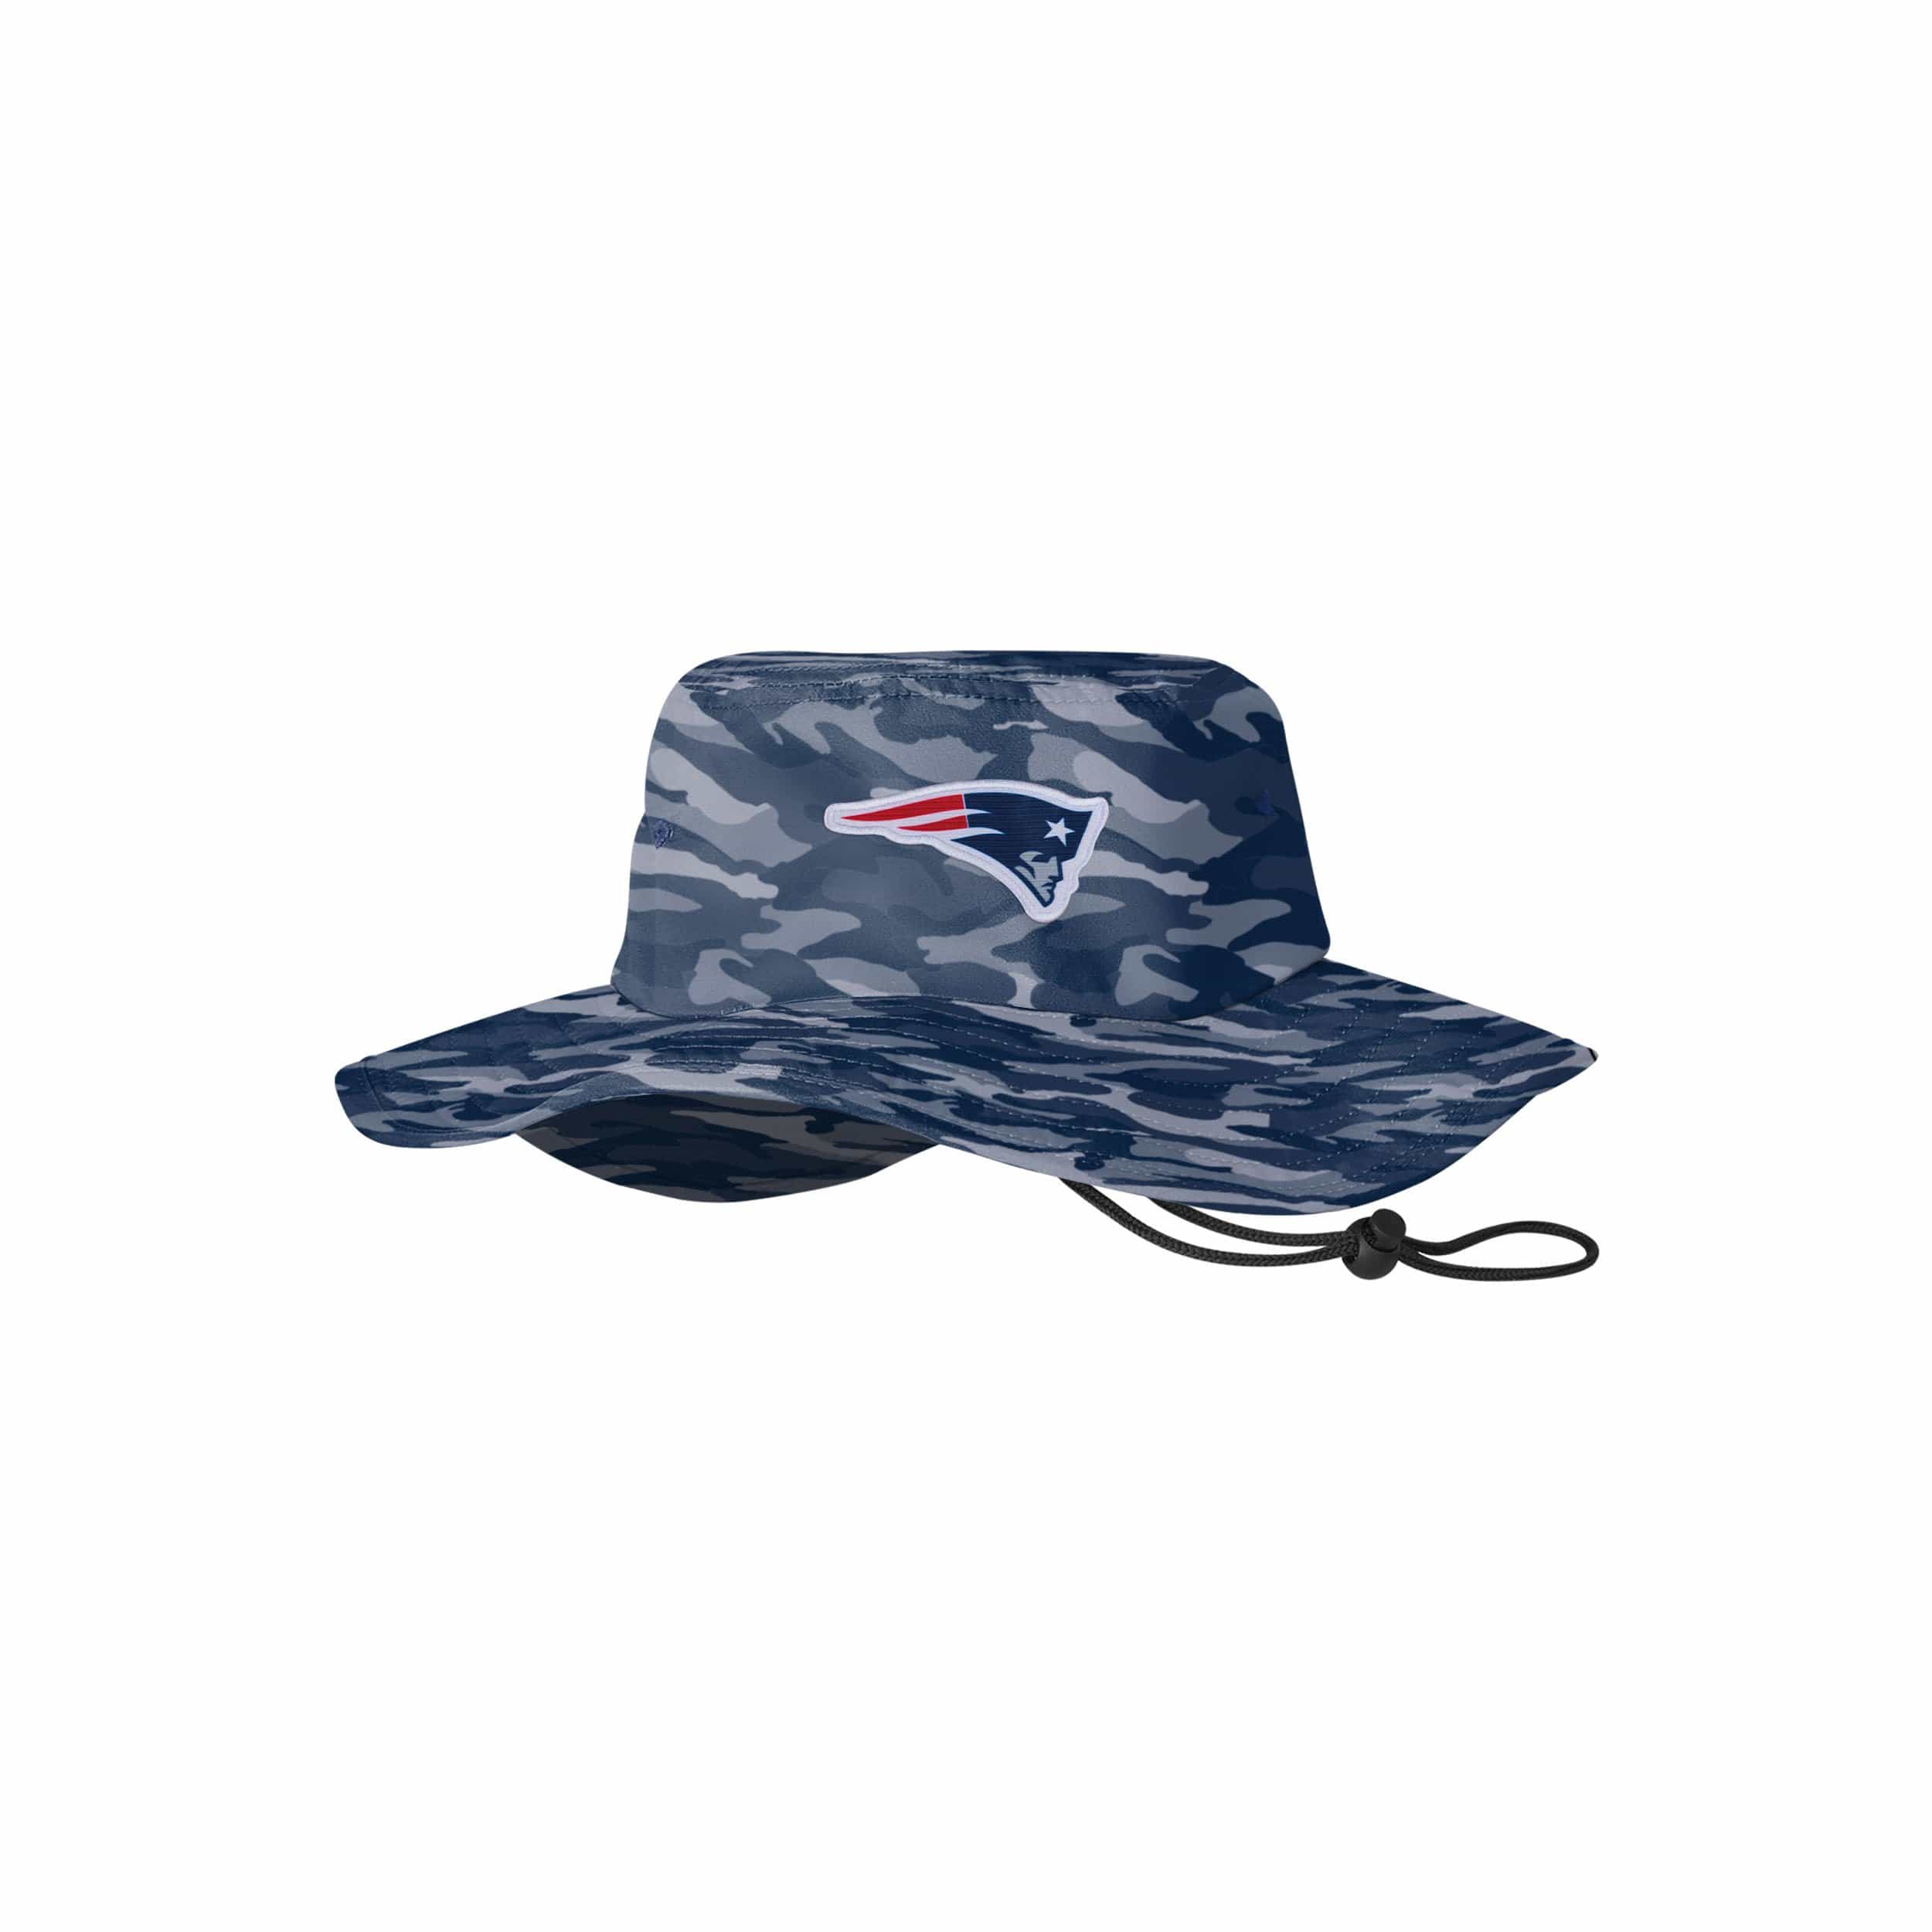 New England Patriots NFL Camo Boonie Hat